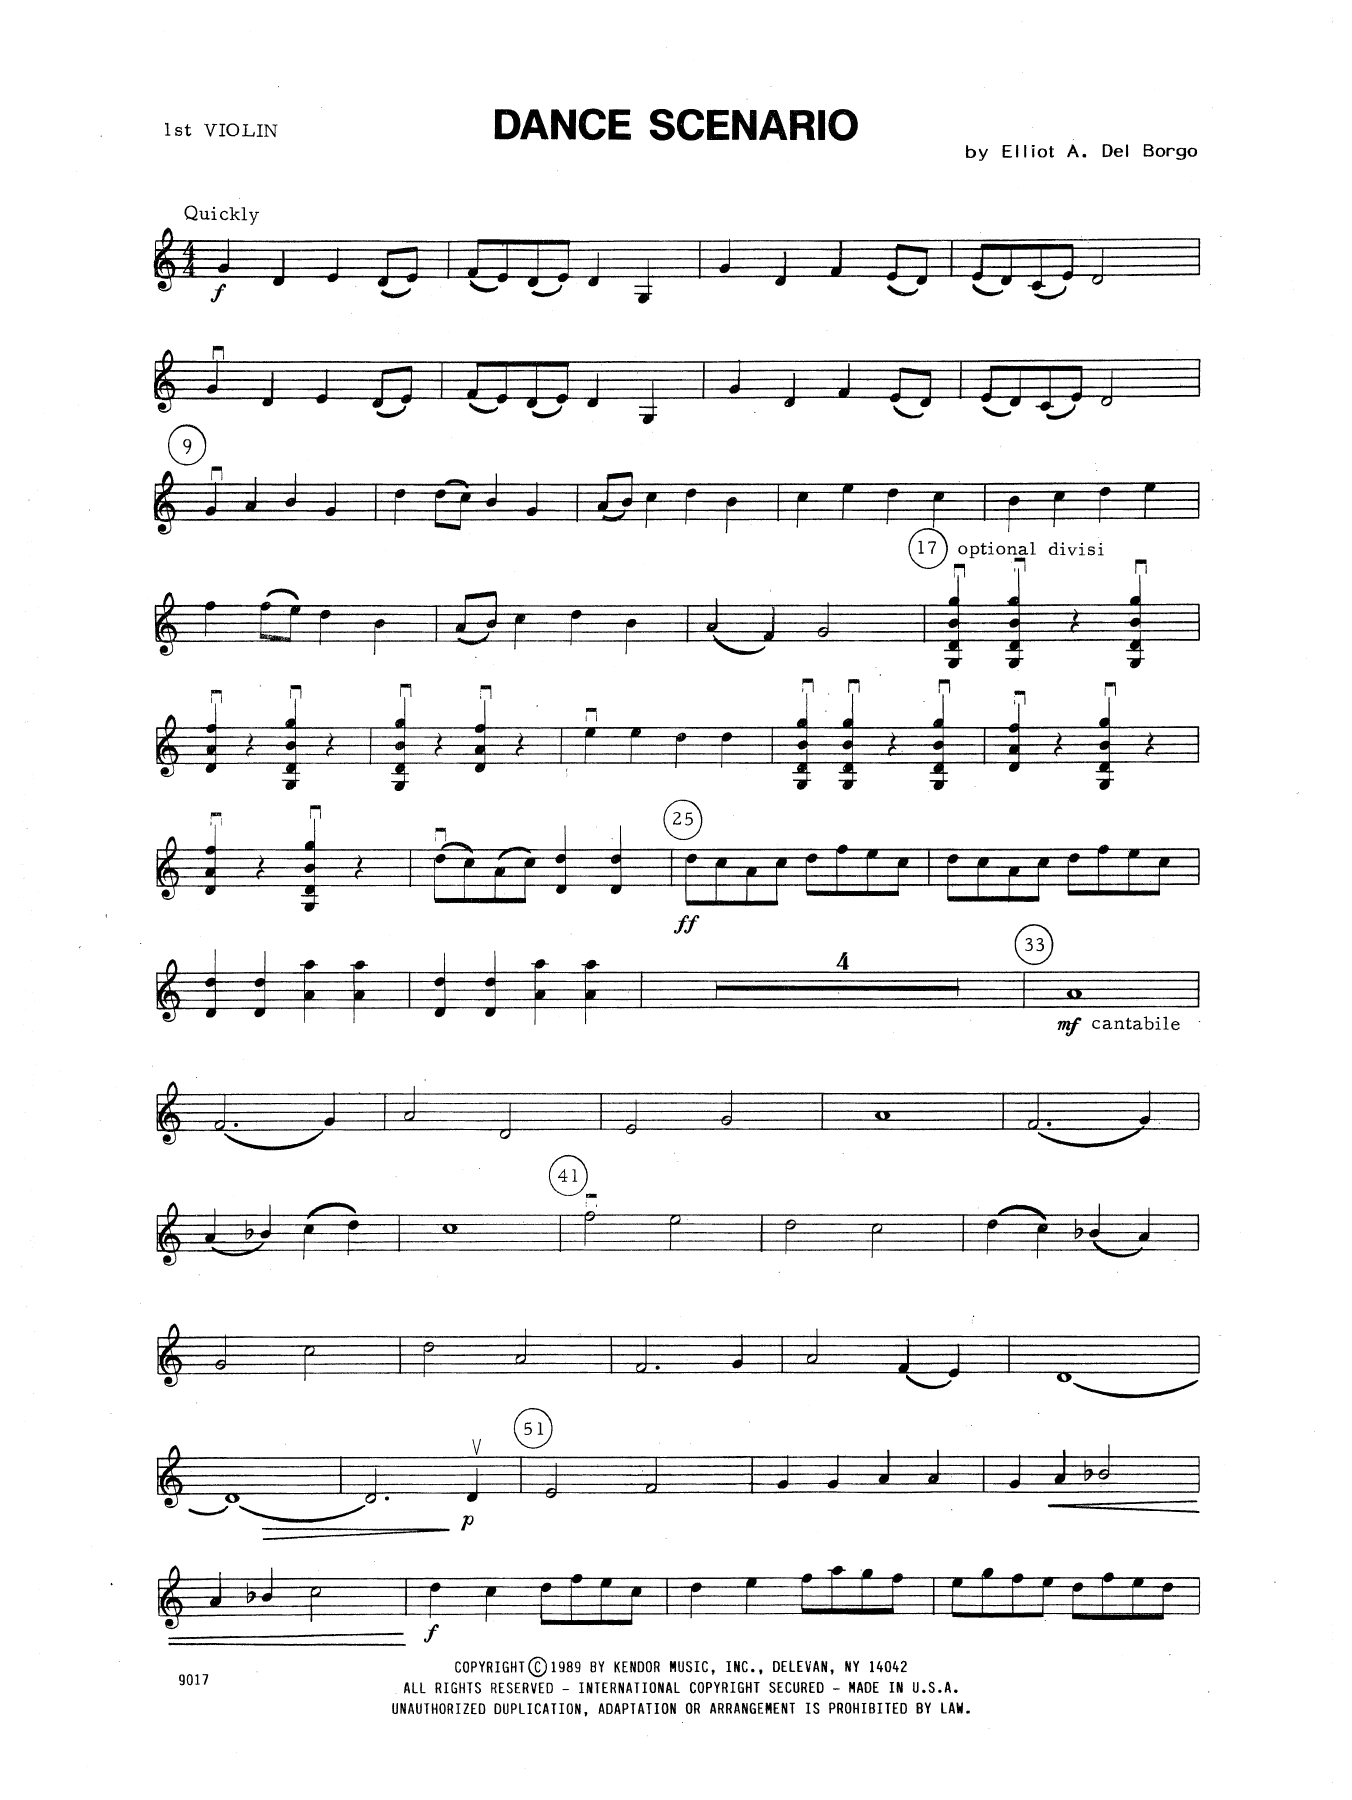 Download Elliot A. Del Borgo Dance Scenario - 1st Violin Sheet Music